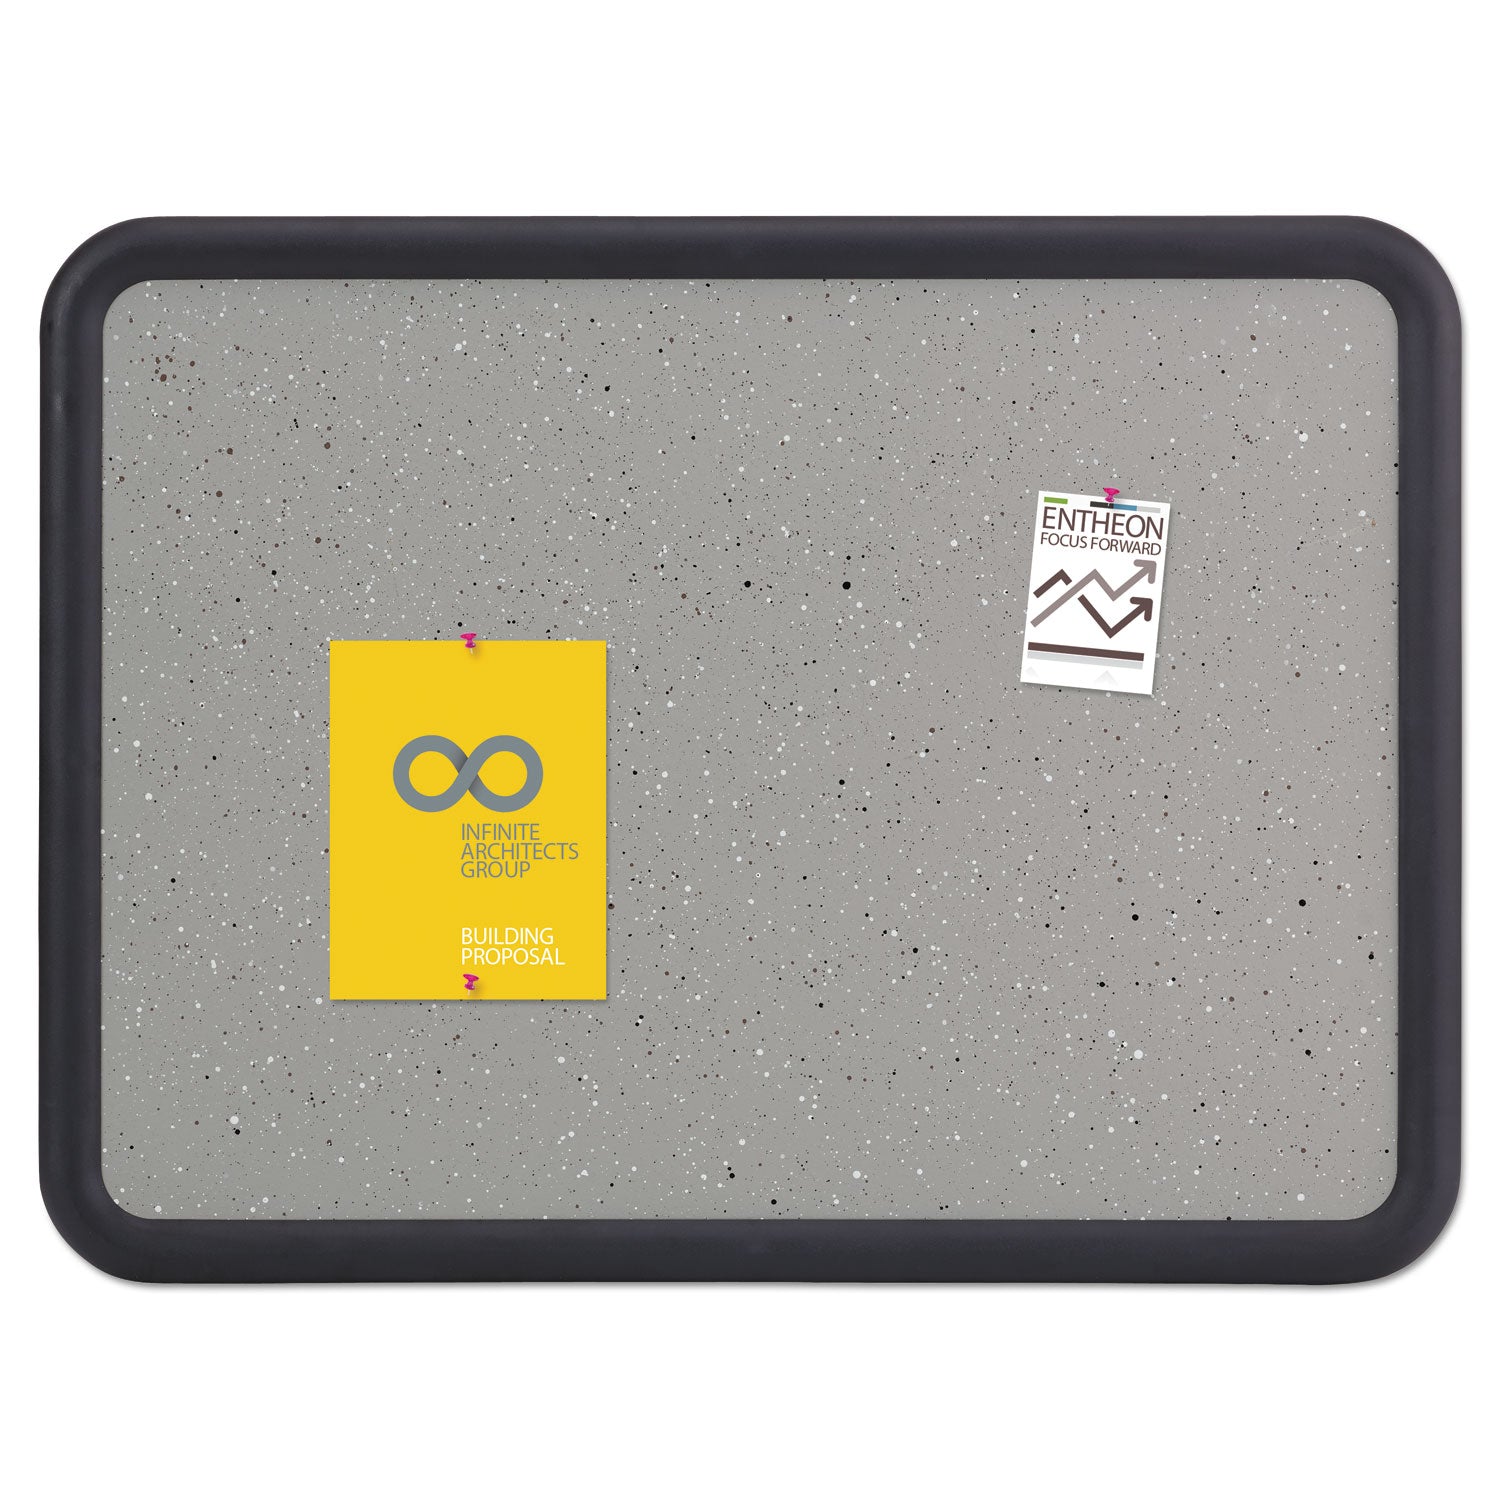 Contour Granite Board, 36 x 24, Granite Gray Surface, Black Plastic Frame - 